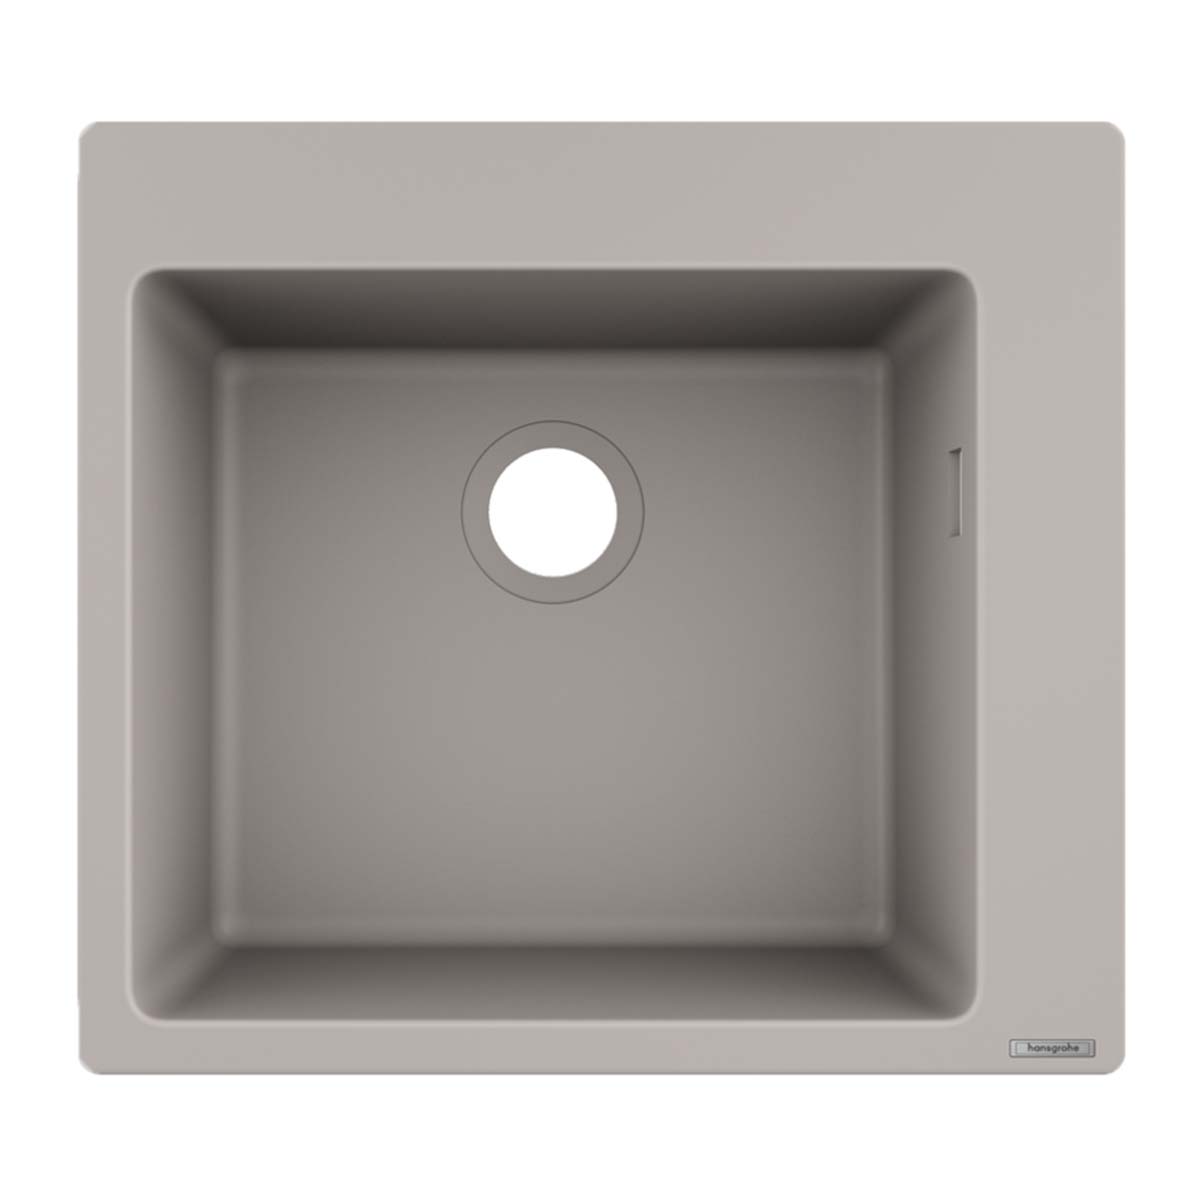 Hansgrohe S51 S510 F450 Single Bowl Kitchen Sink SilicaTec concrete grey 540x490mm